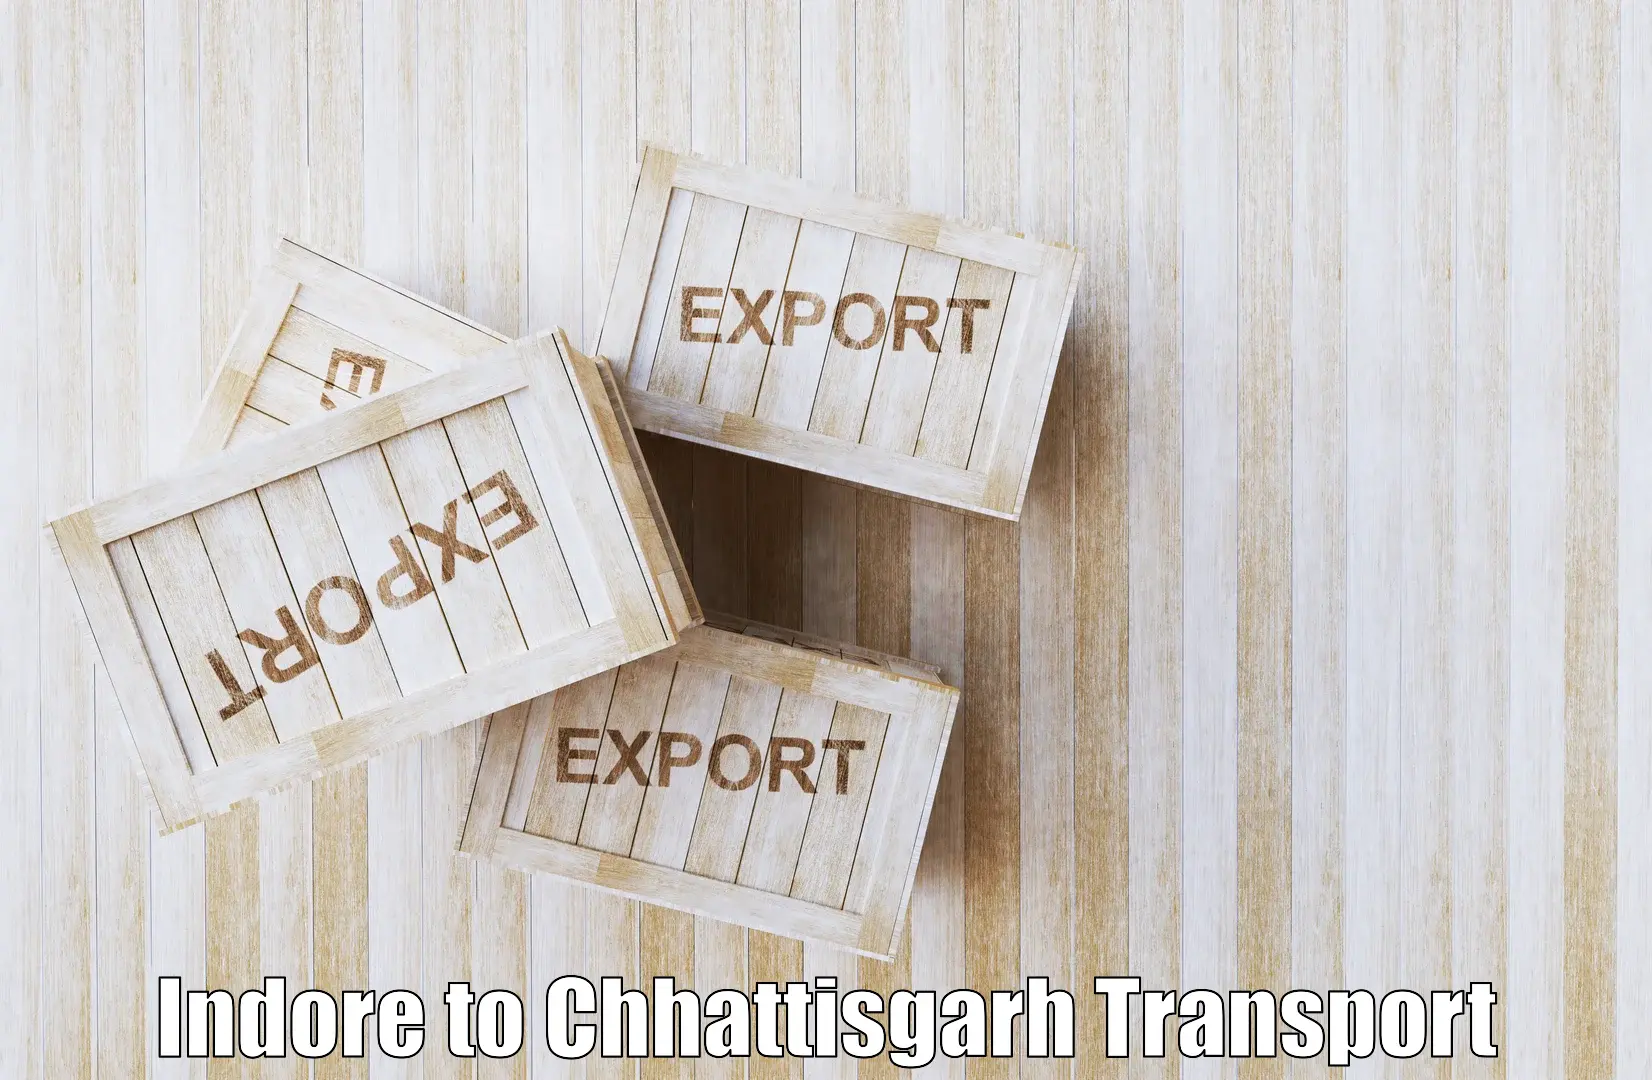 Transport in sharing Indore to Patna Chhattisgarh